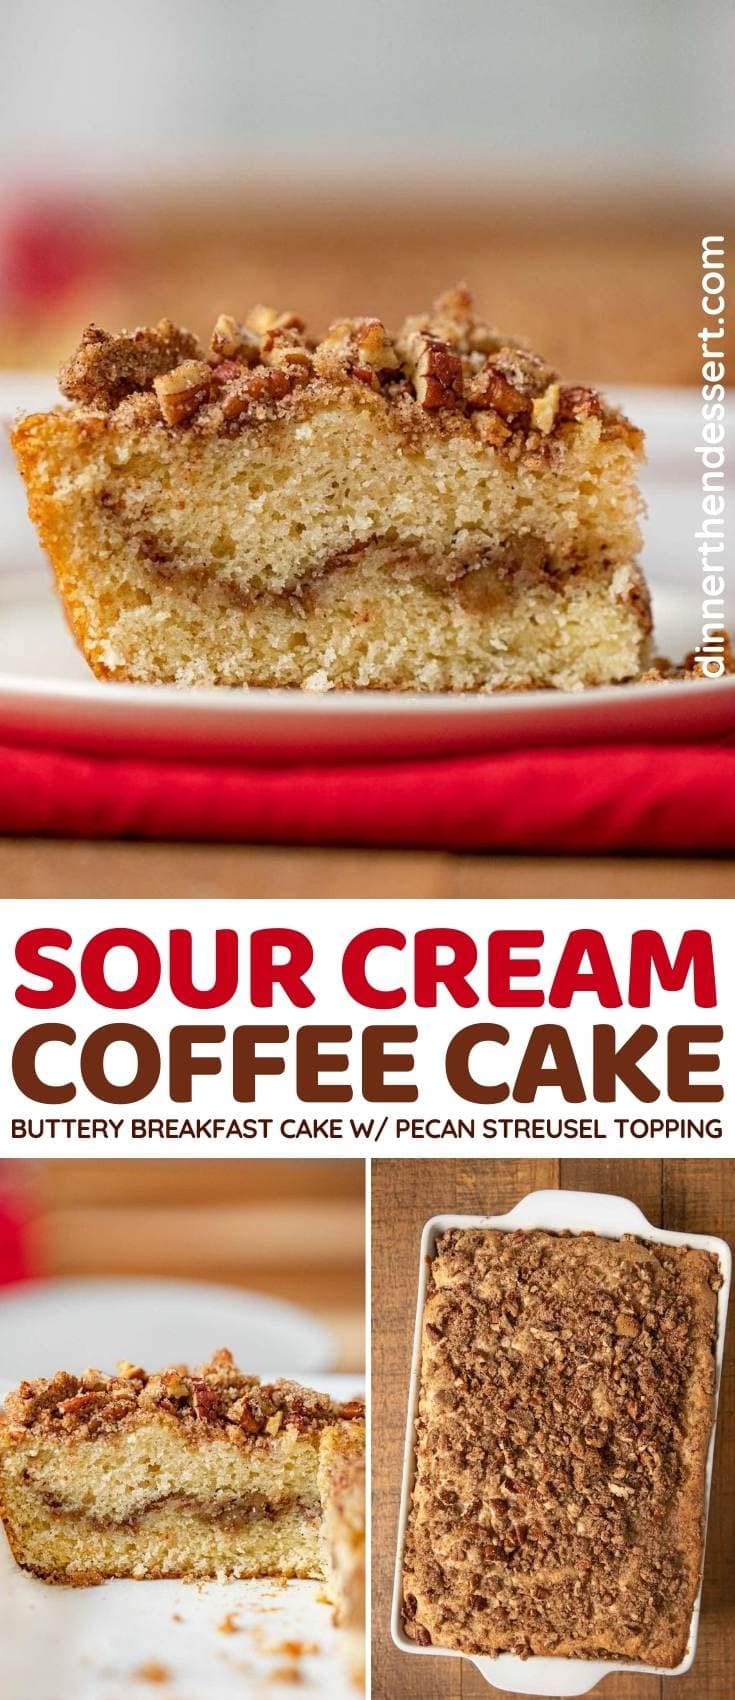 Sour Cream Coffee Cake collage